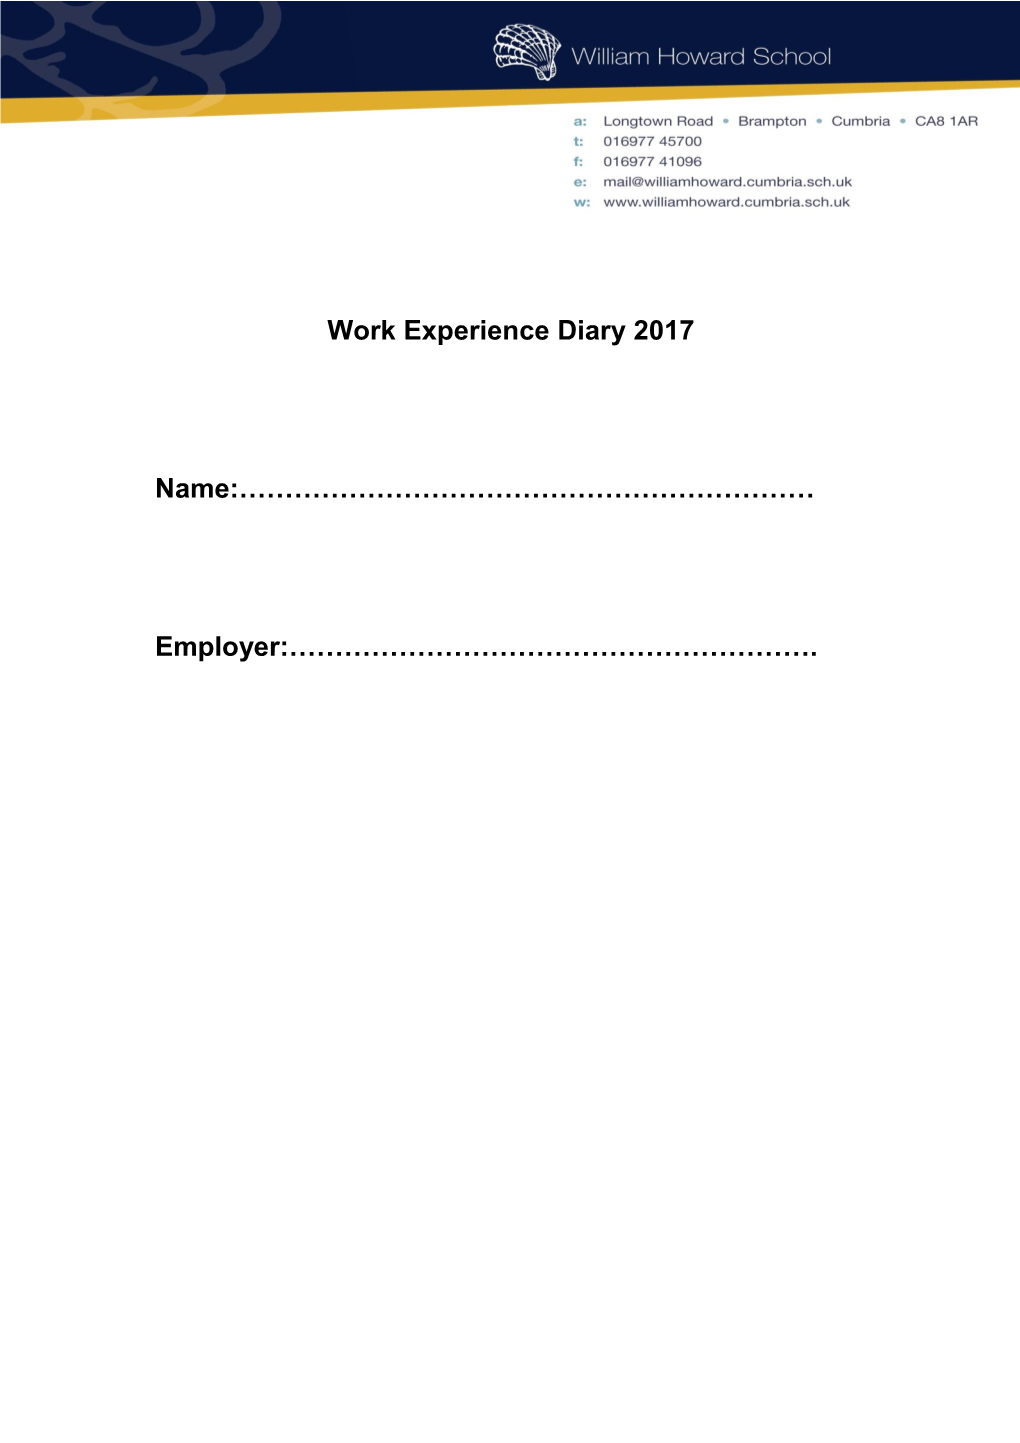 Work Experience Diary 2017